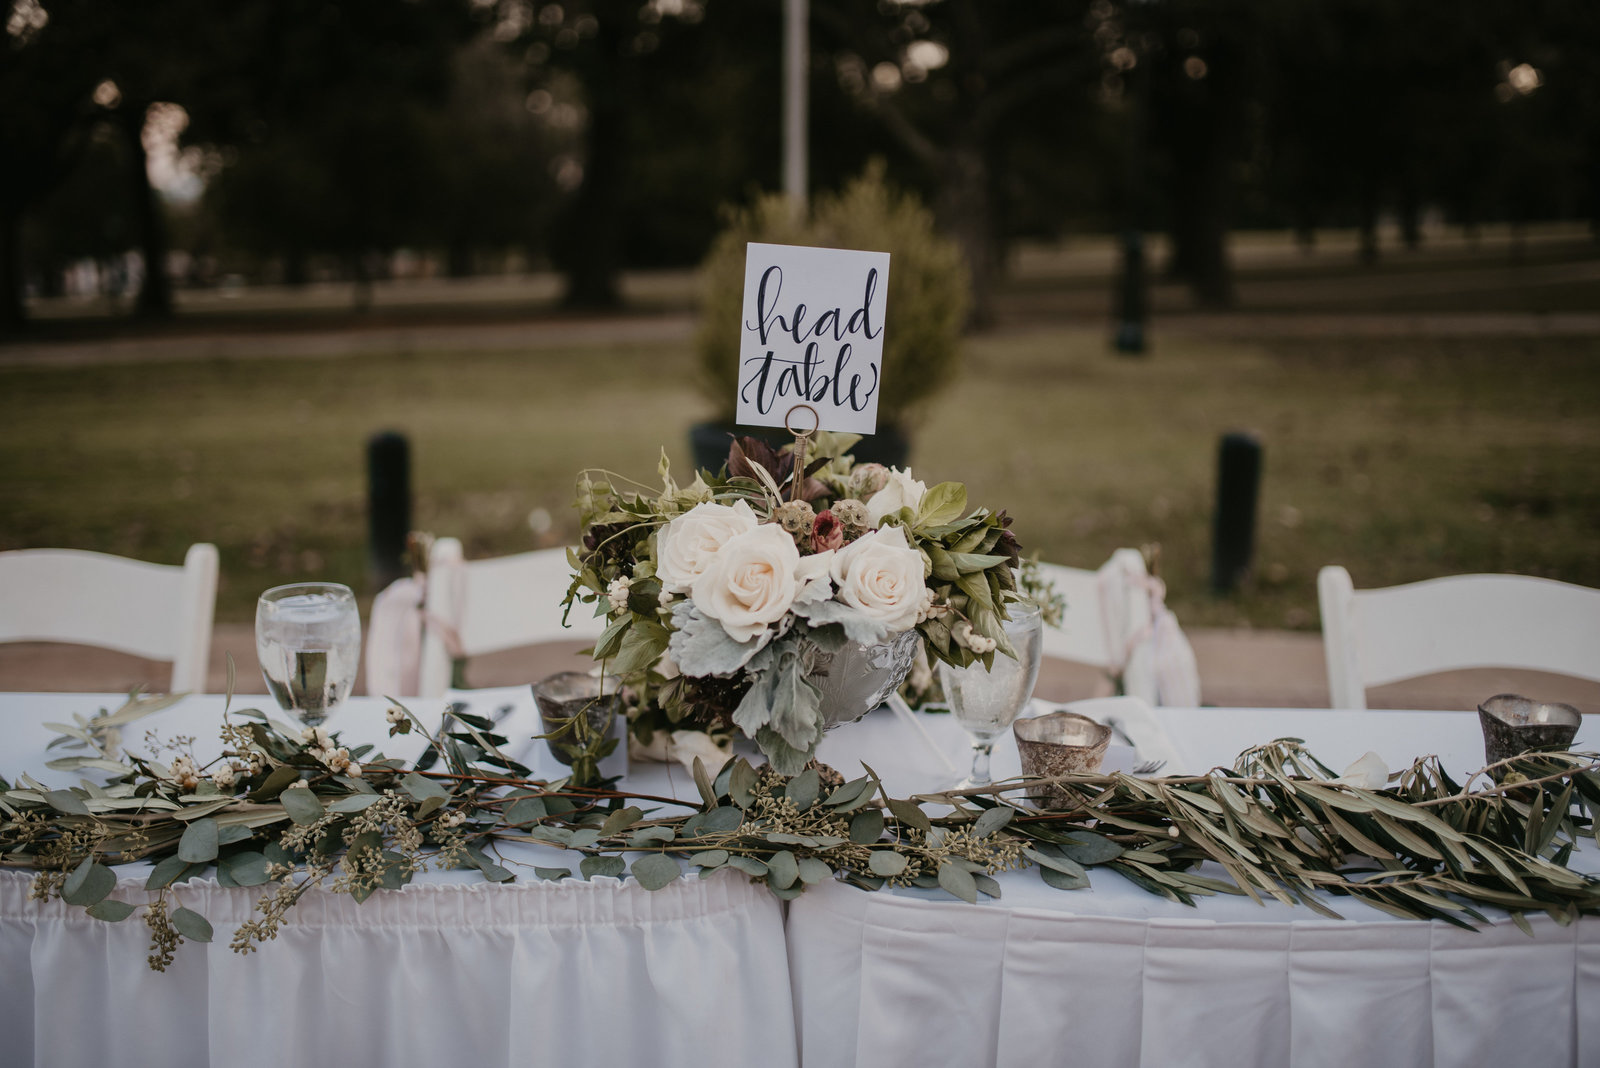 Head table reception details at a Northwest Arkansas wedding